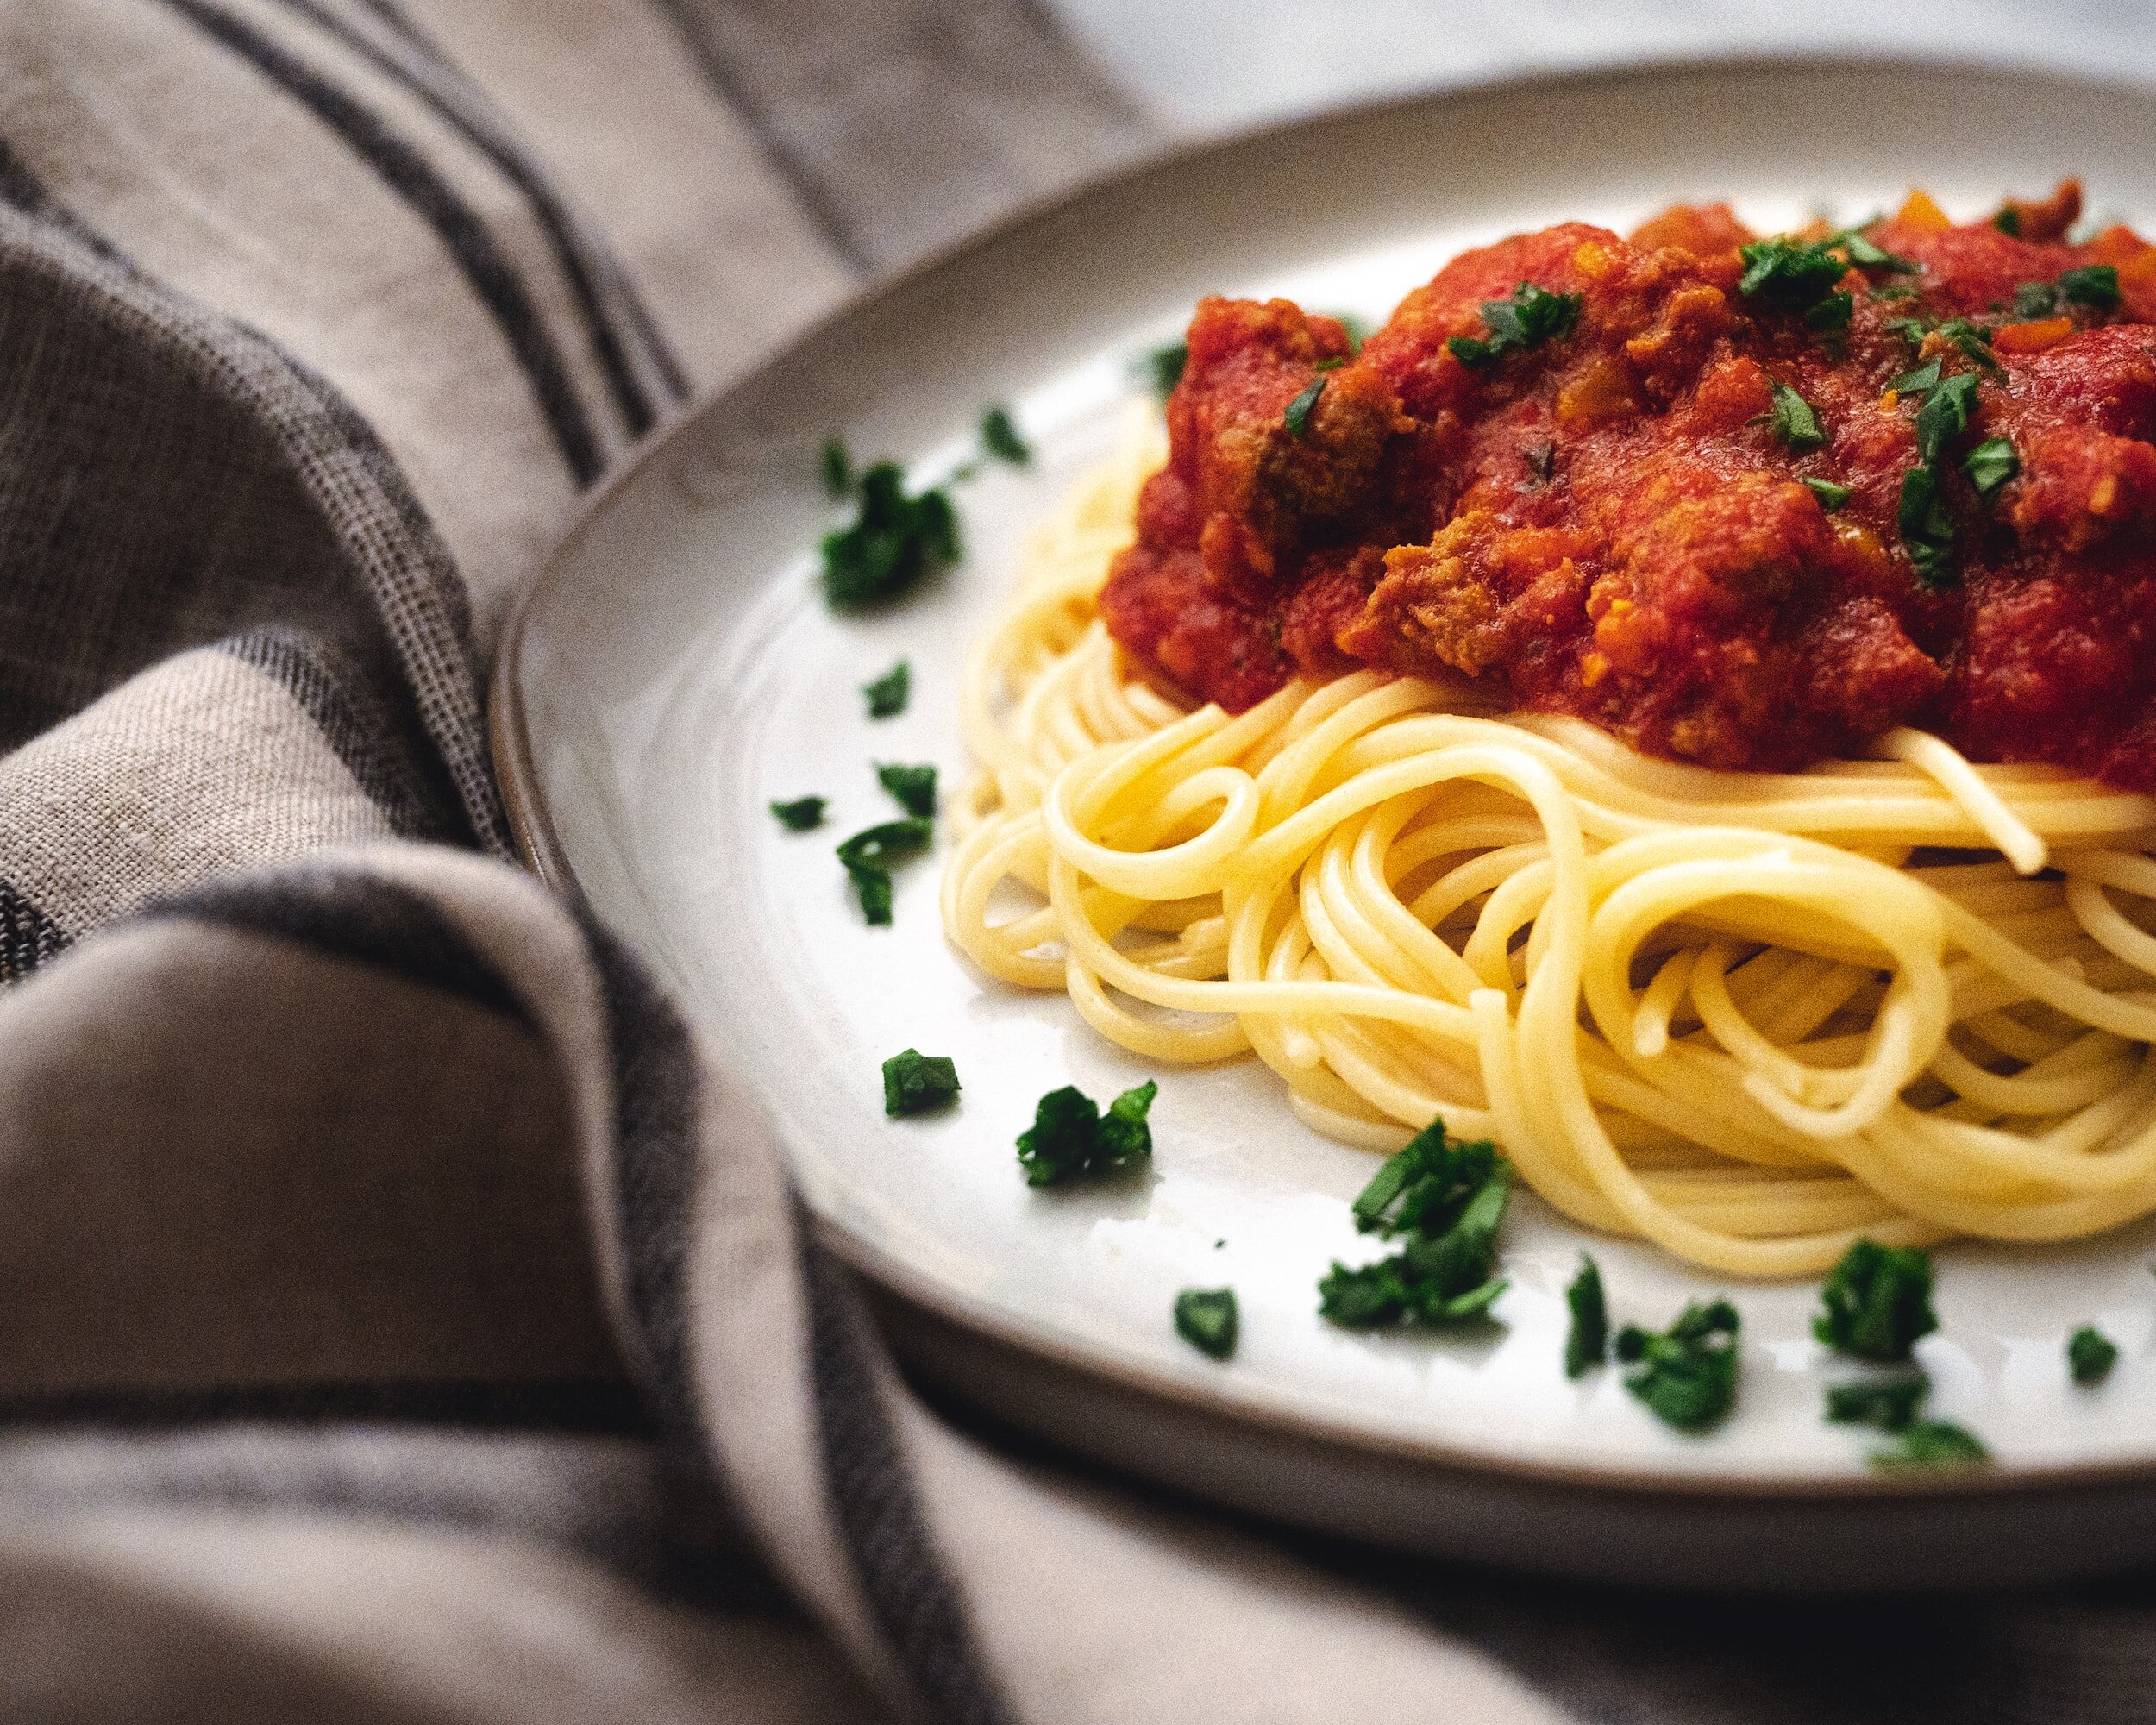 barolo food pairing - spaghetti and meat sauce